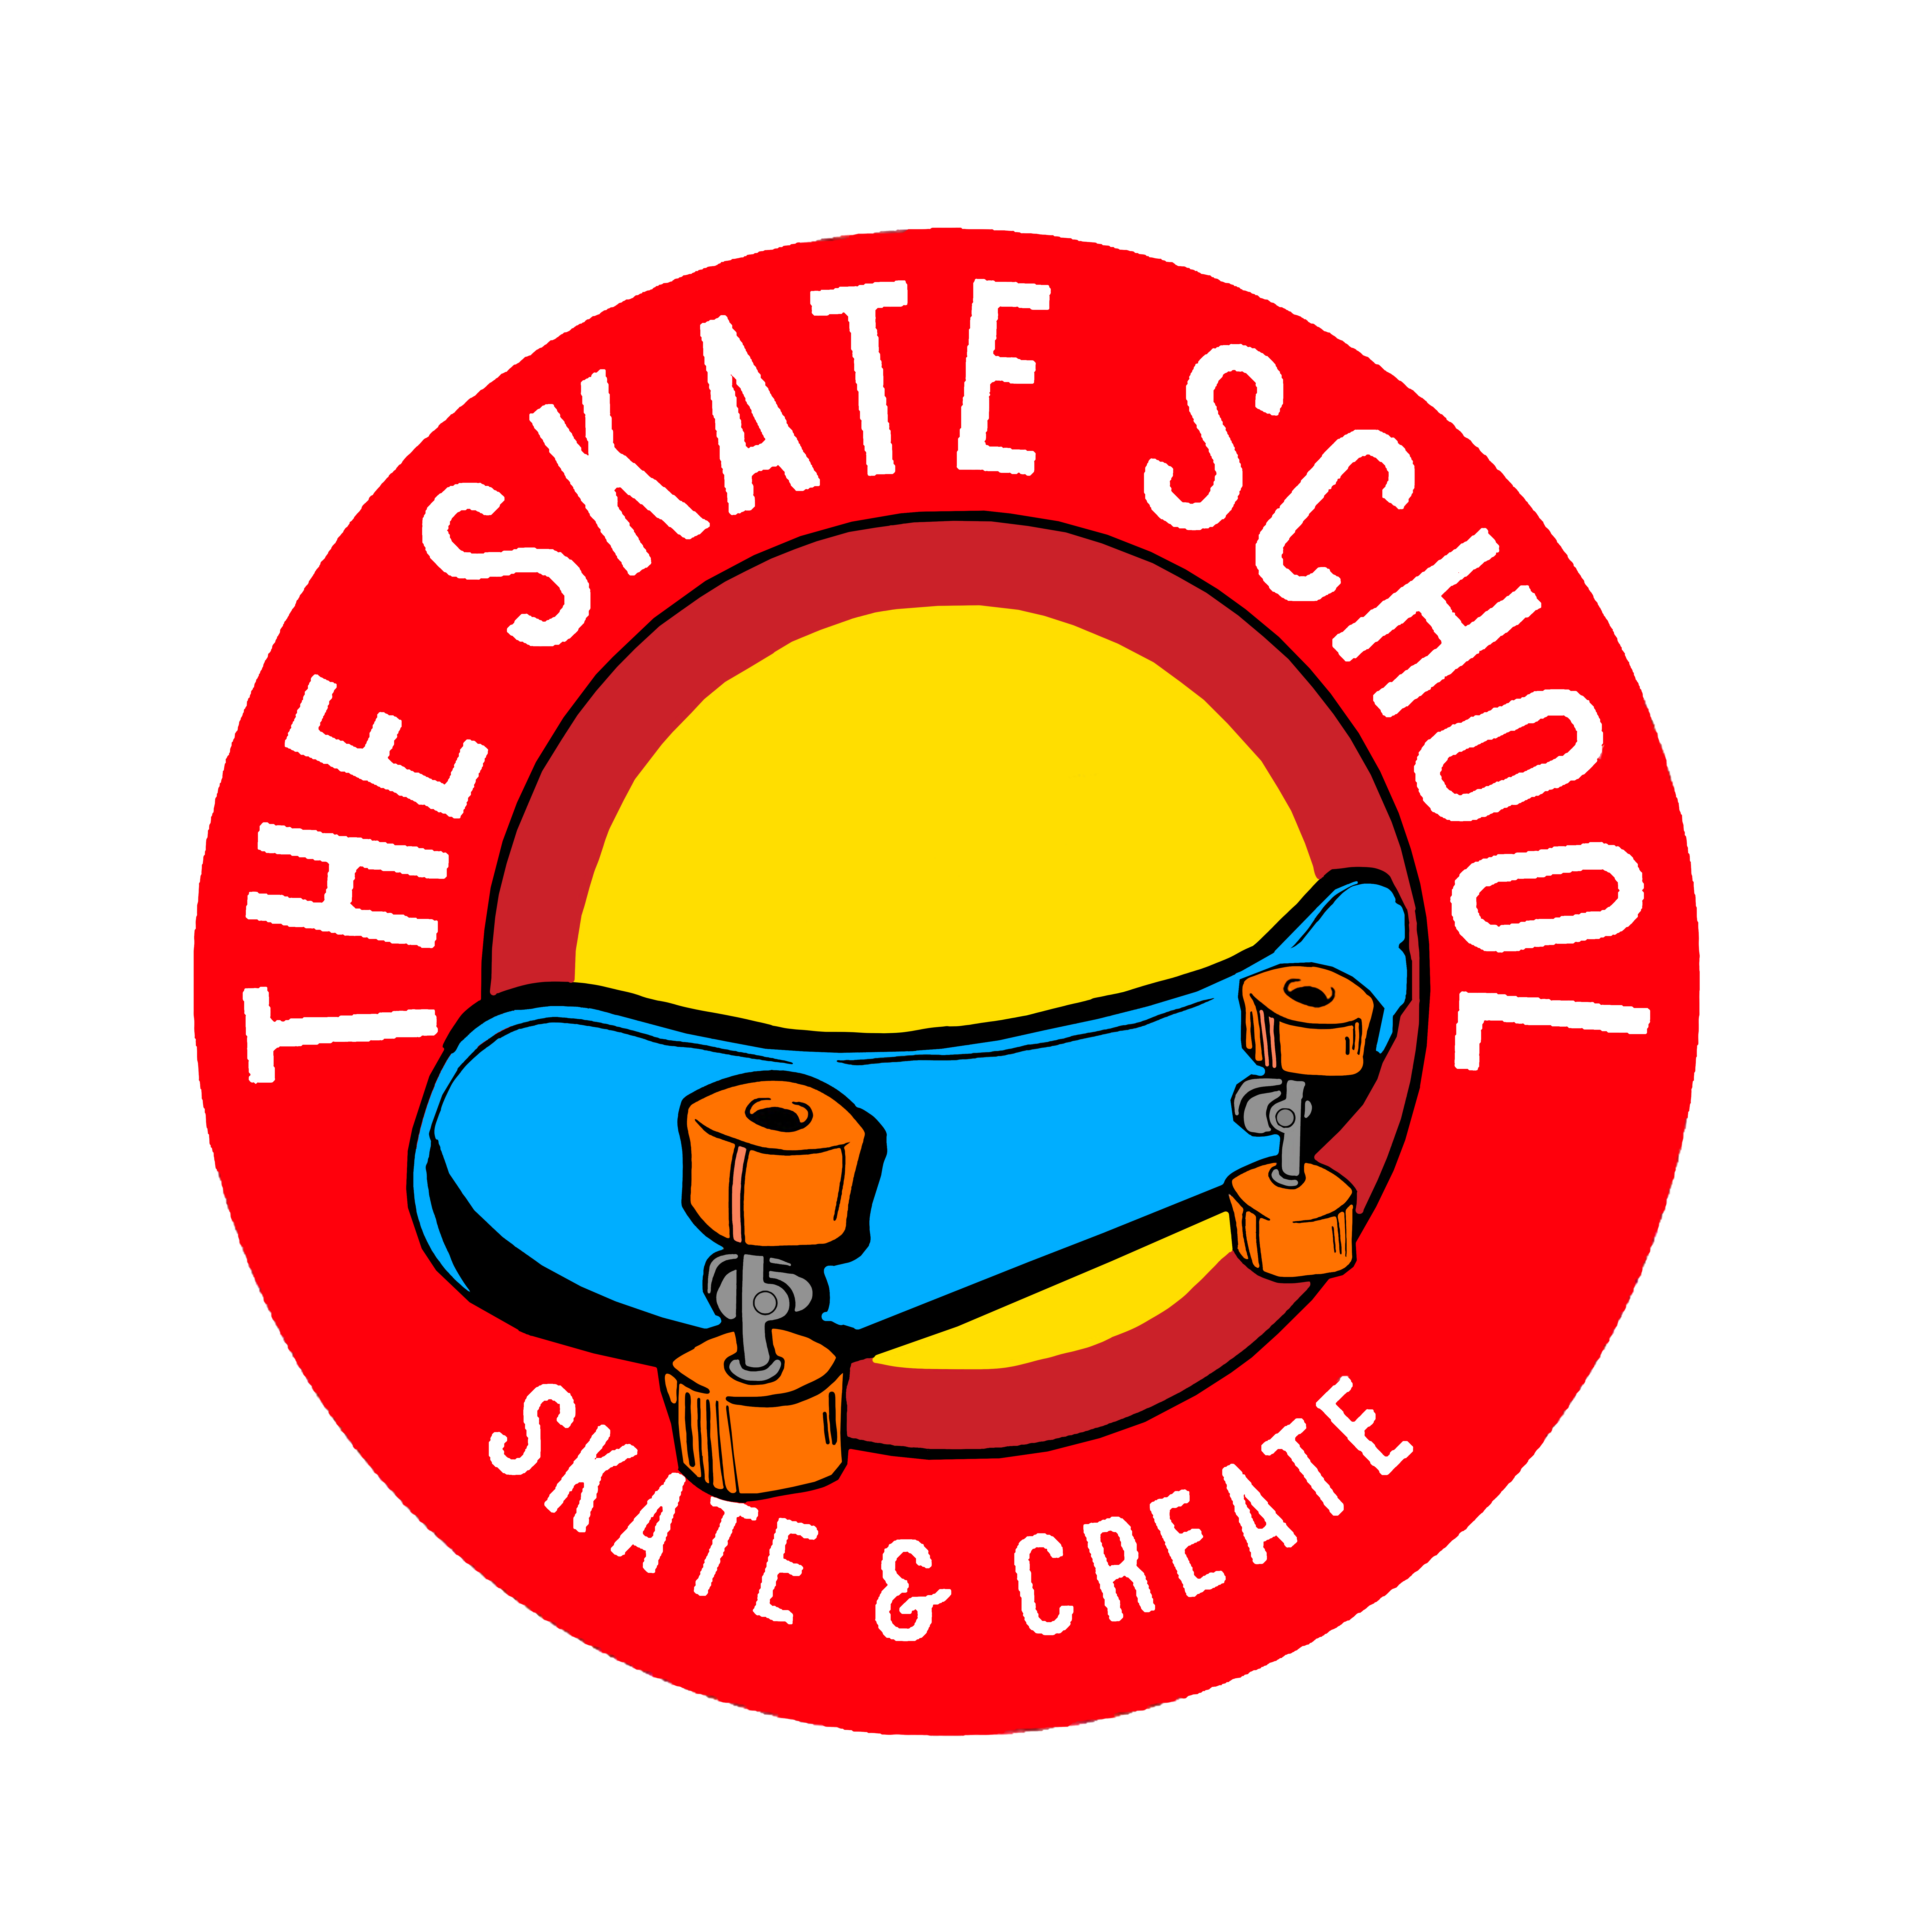 The Skate School